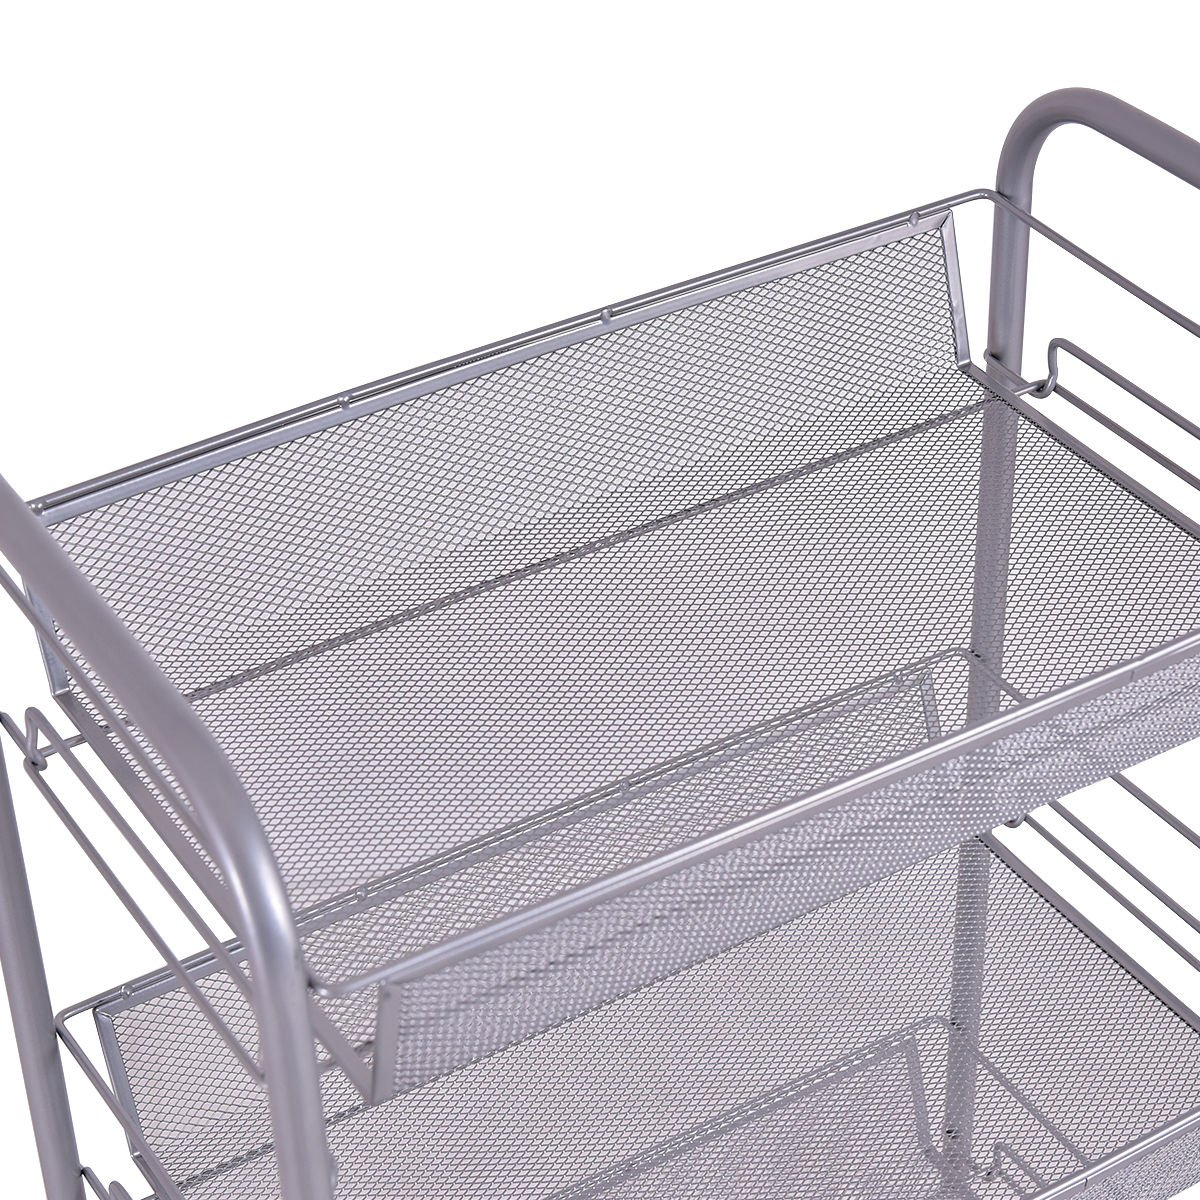 Giantex Storage Rack Trolley Cart Home Kitchen Organizer Utility Baskets (4 Tier, Silver)